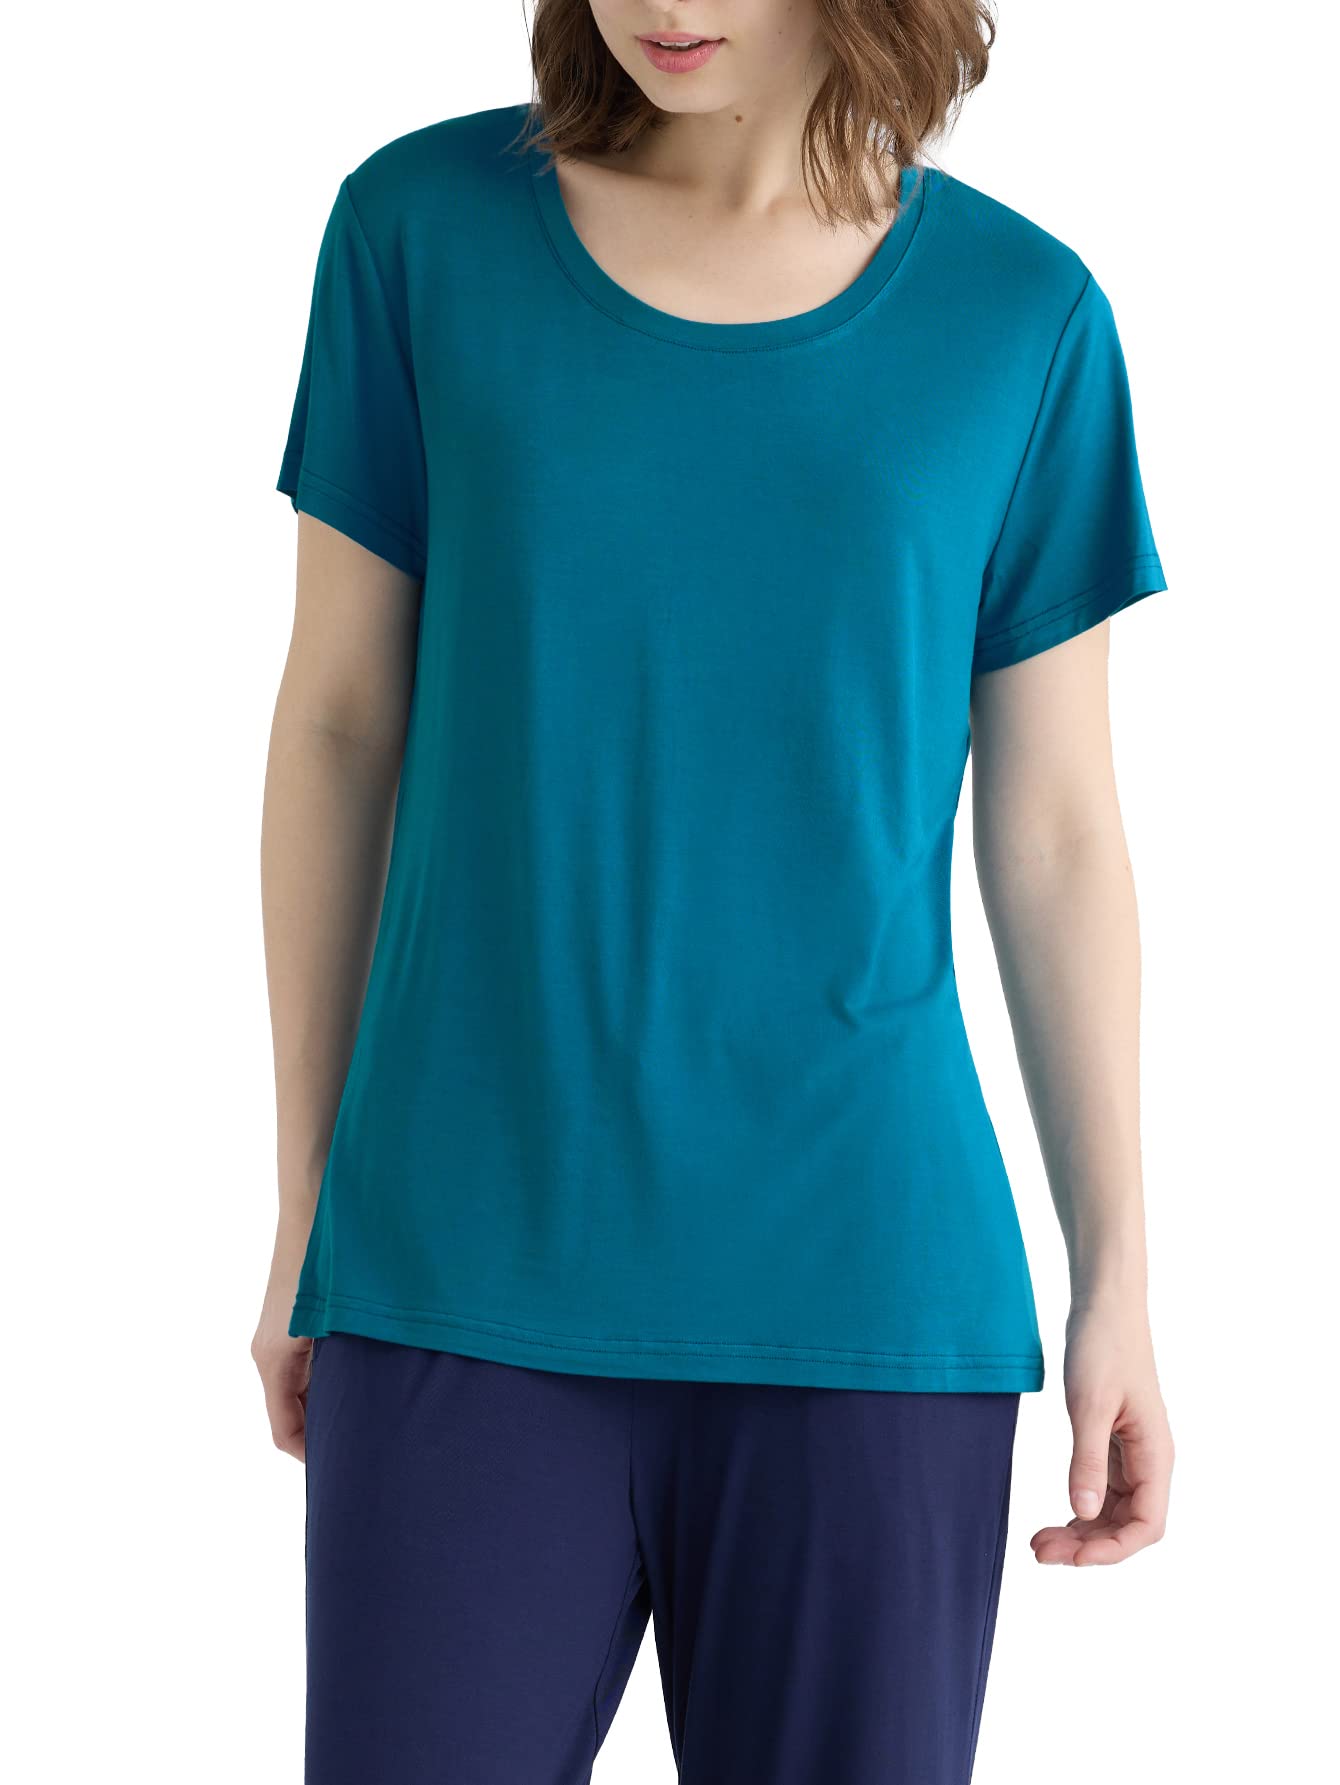 Women's Soft Comfy Pajama Tops Scoop Neck Sleep Tee Shirt - Latuza